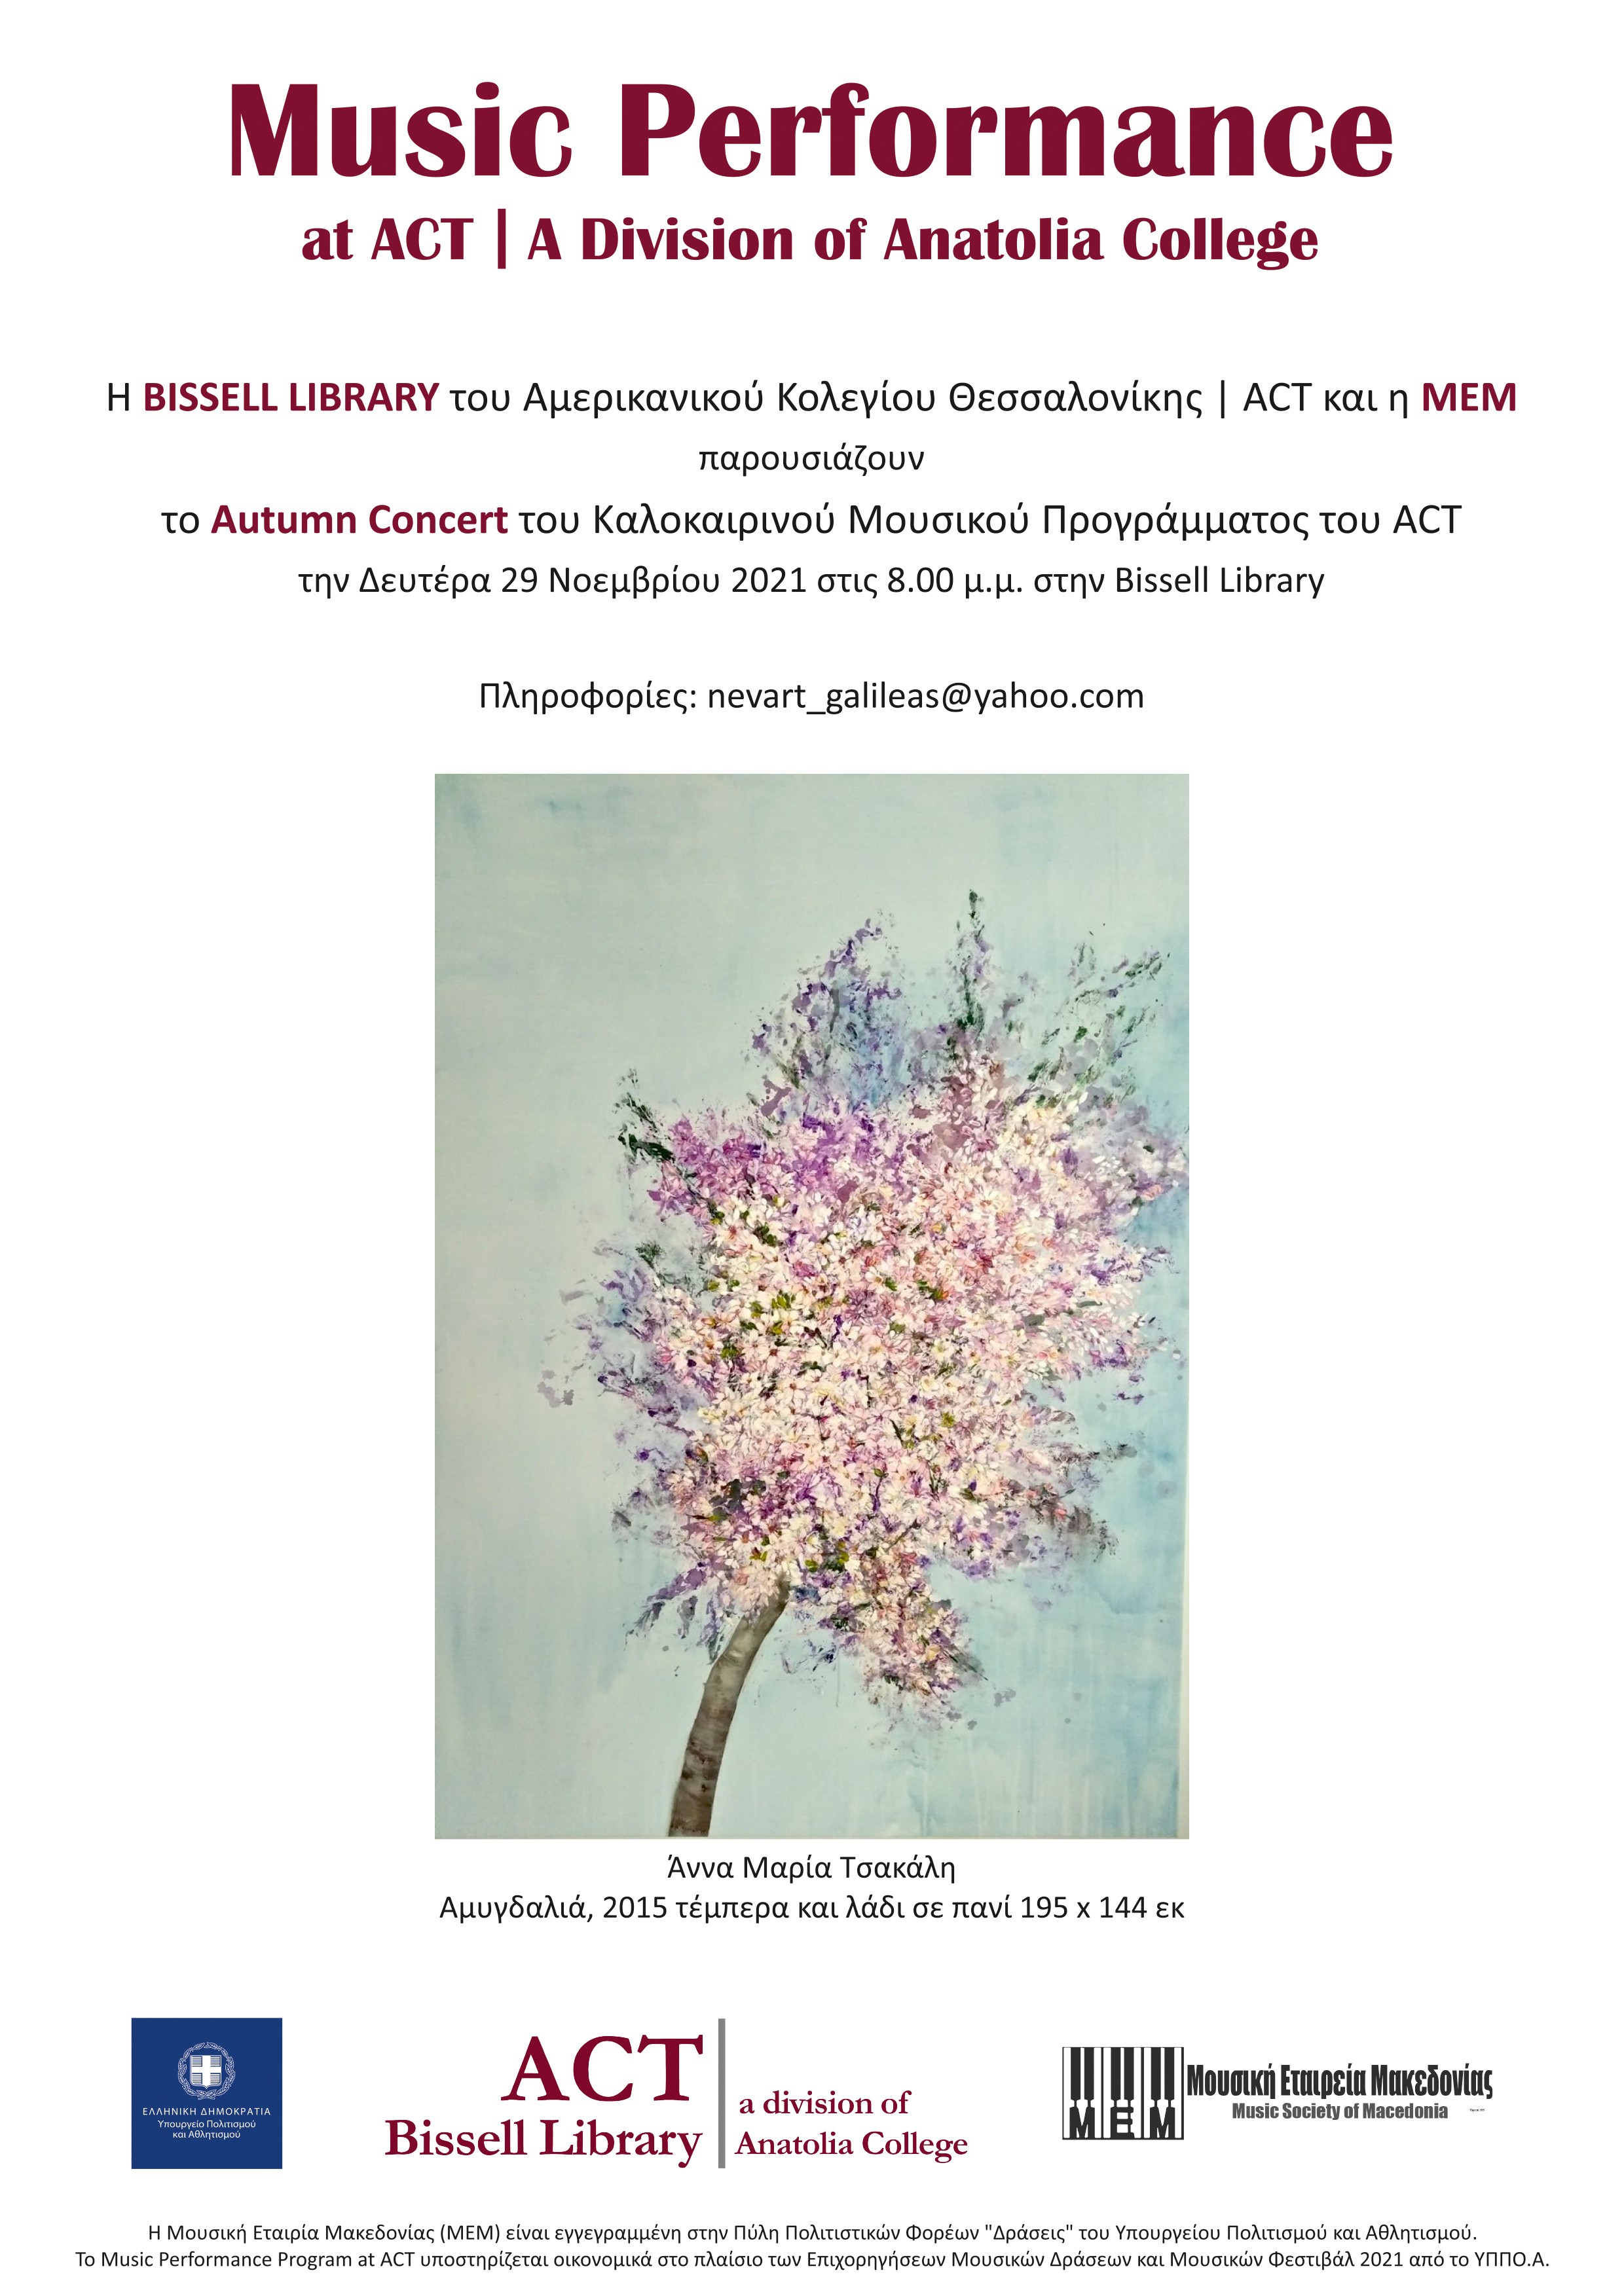 bissel-library-poster.jpg